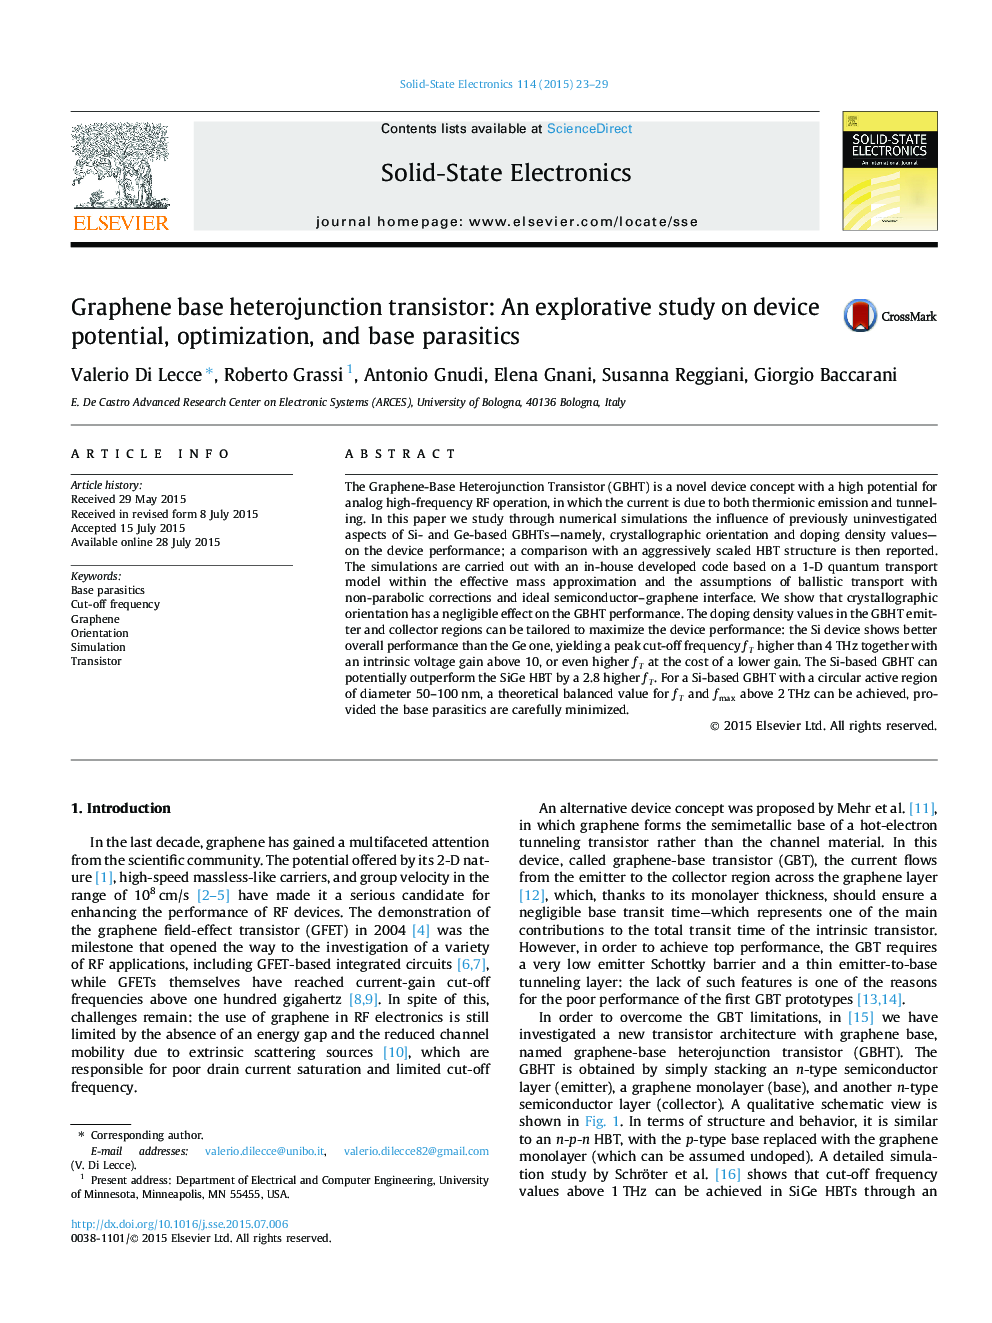 Graphene base heterojunction transistor: An explorative study on device potential, optimization, and base parasitics